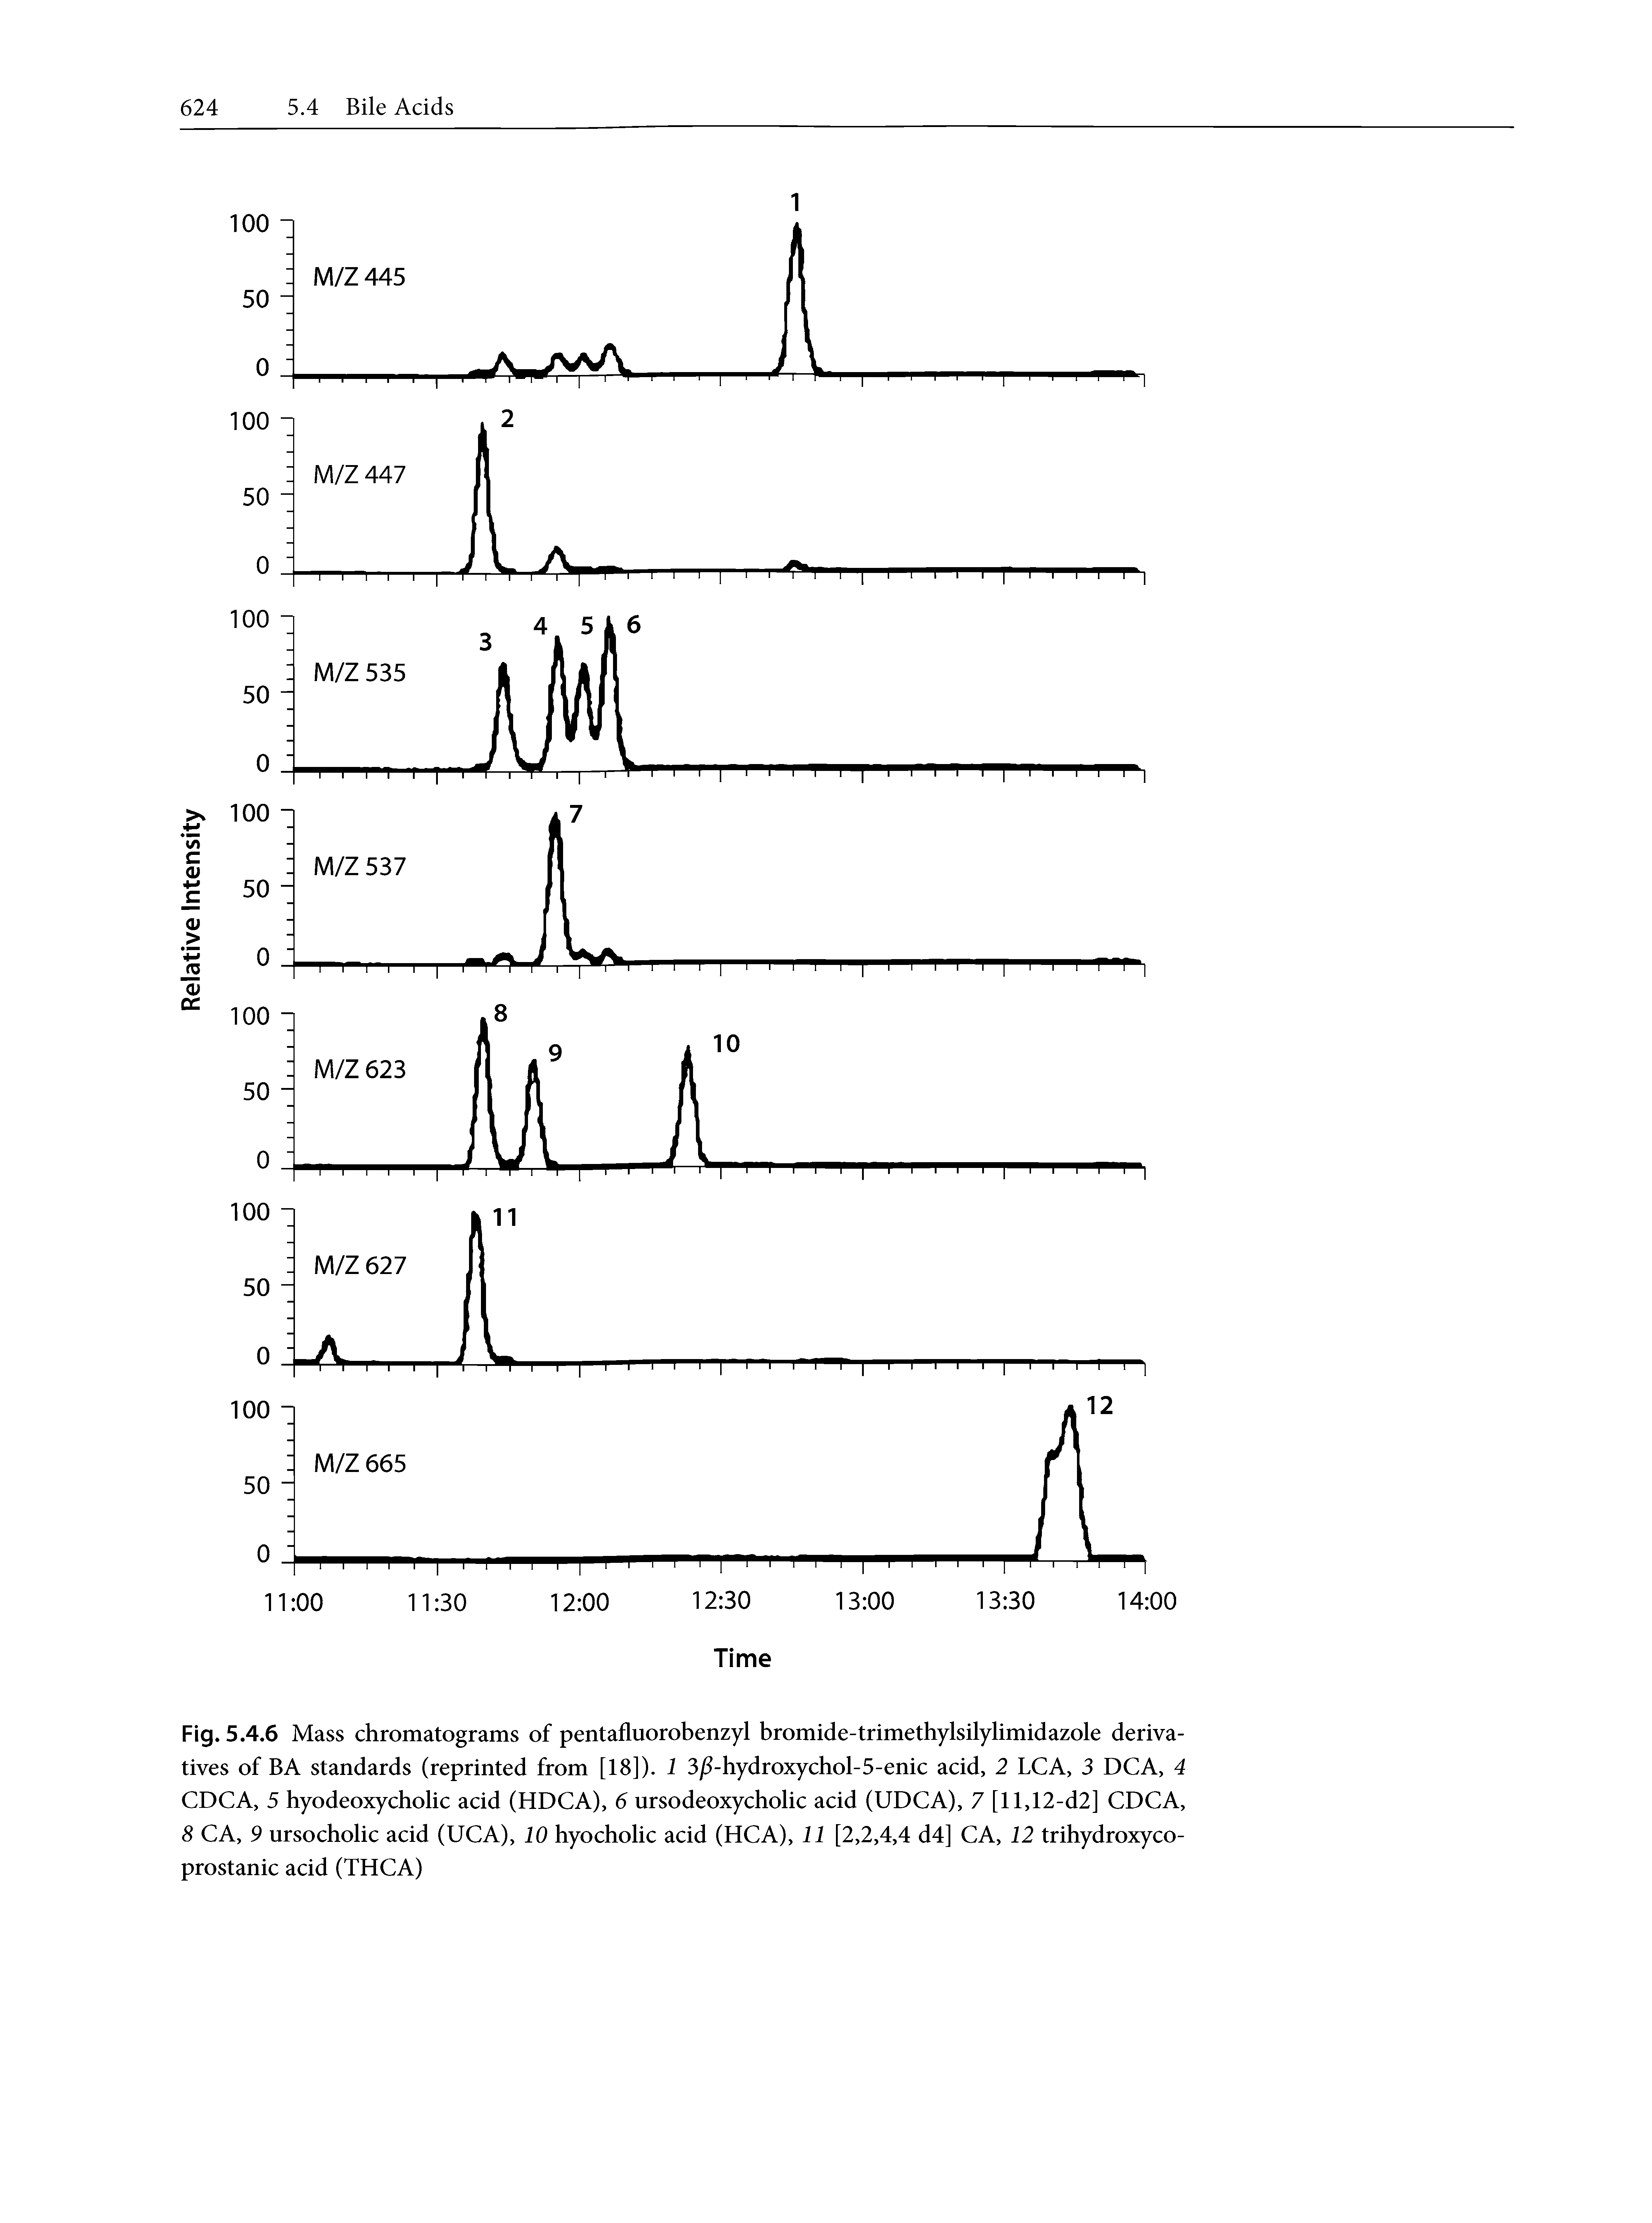 Fig. 5.4.6 Mass chromatograms of pentafluorobenzyl bromide-trimethylsilylimidazole derivatives of BA standards (reprinted from [18]). 1 3j5-hydroxychol-5-enic acid, 2 LCA, 3 DCA, 4 CDCA, 5 hyodeoxycholic acid (HDCA), 6 ursodeoxycholic acid (UDCA), 7 [ll,12-d2] CDCA,...